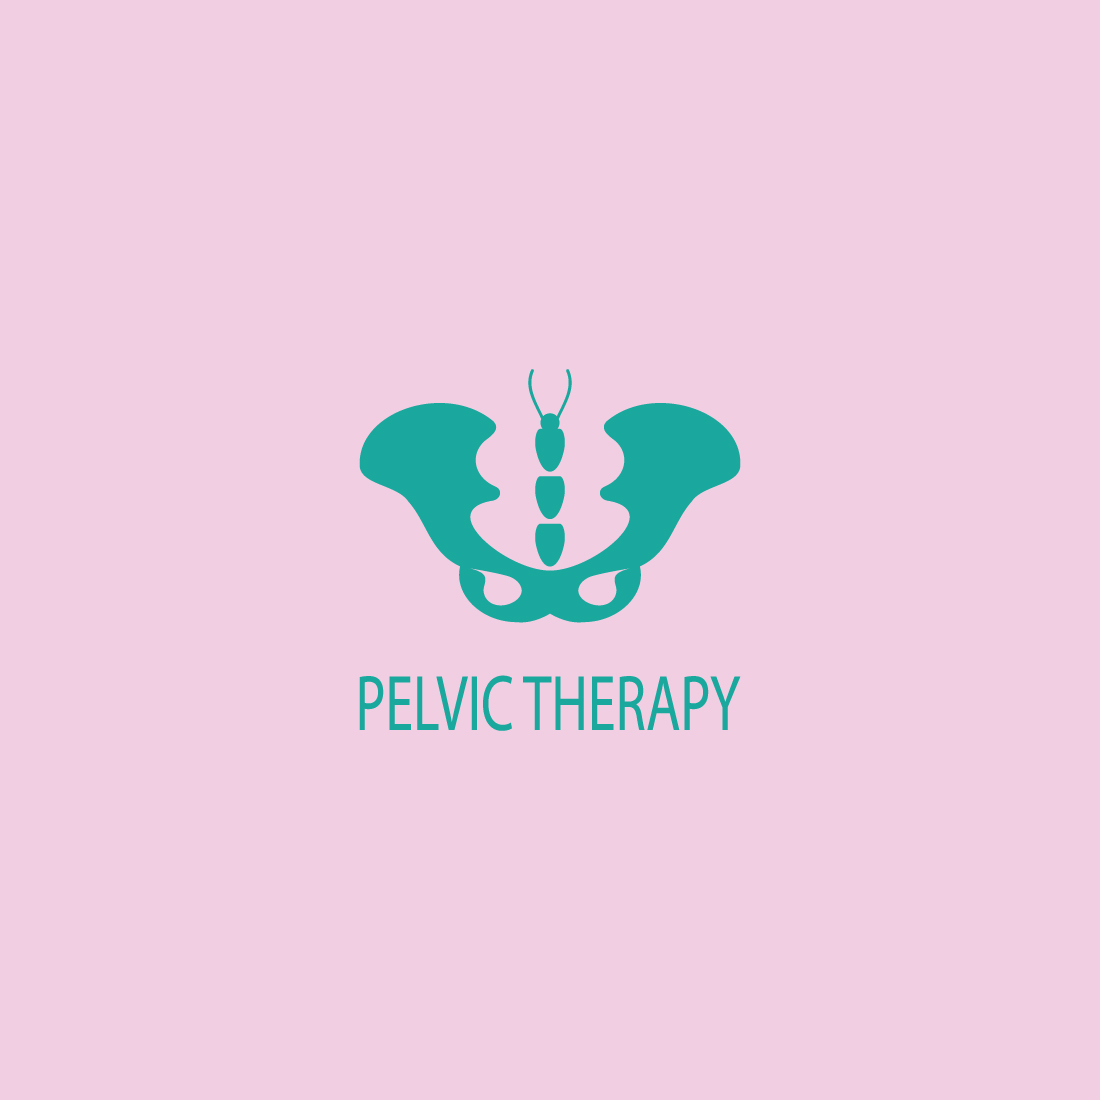 pelvic therapy logo